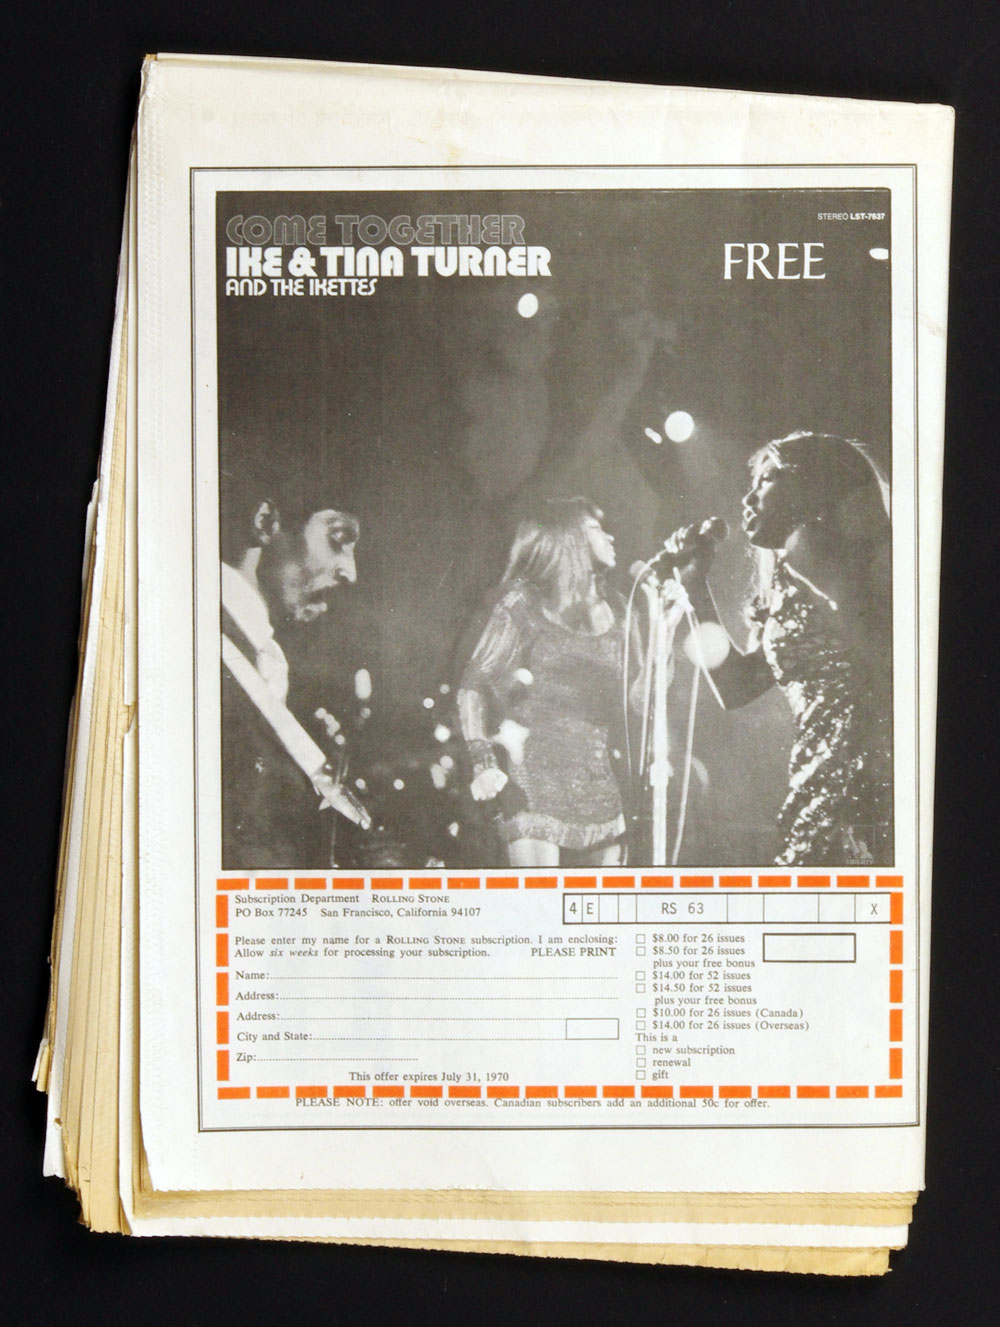 Rolling Stone Magazine Back Issue 1970 Jul 23 No. 63 David Crosby